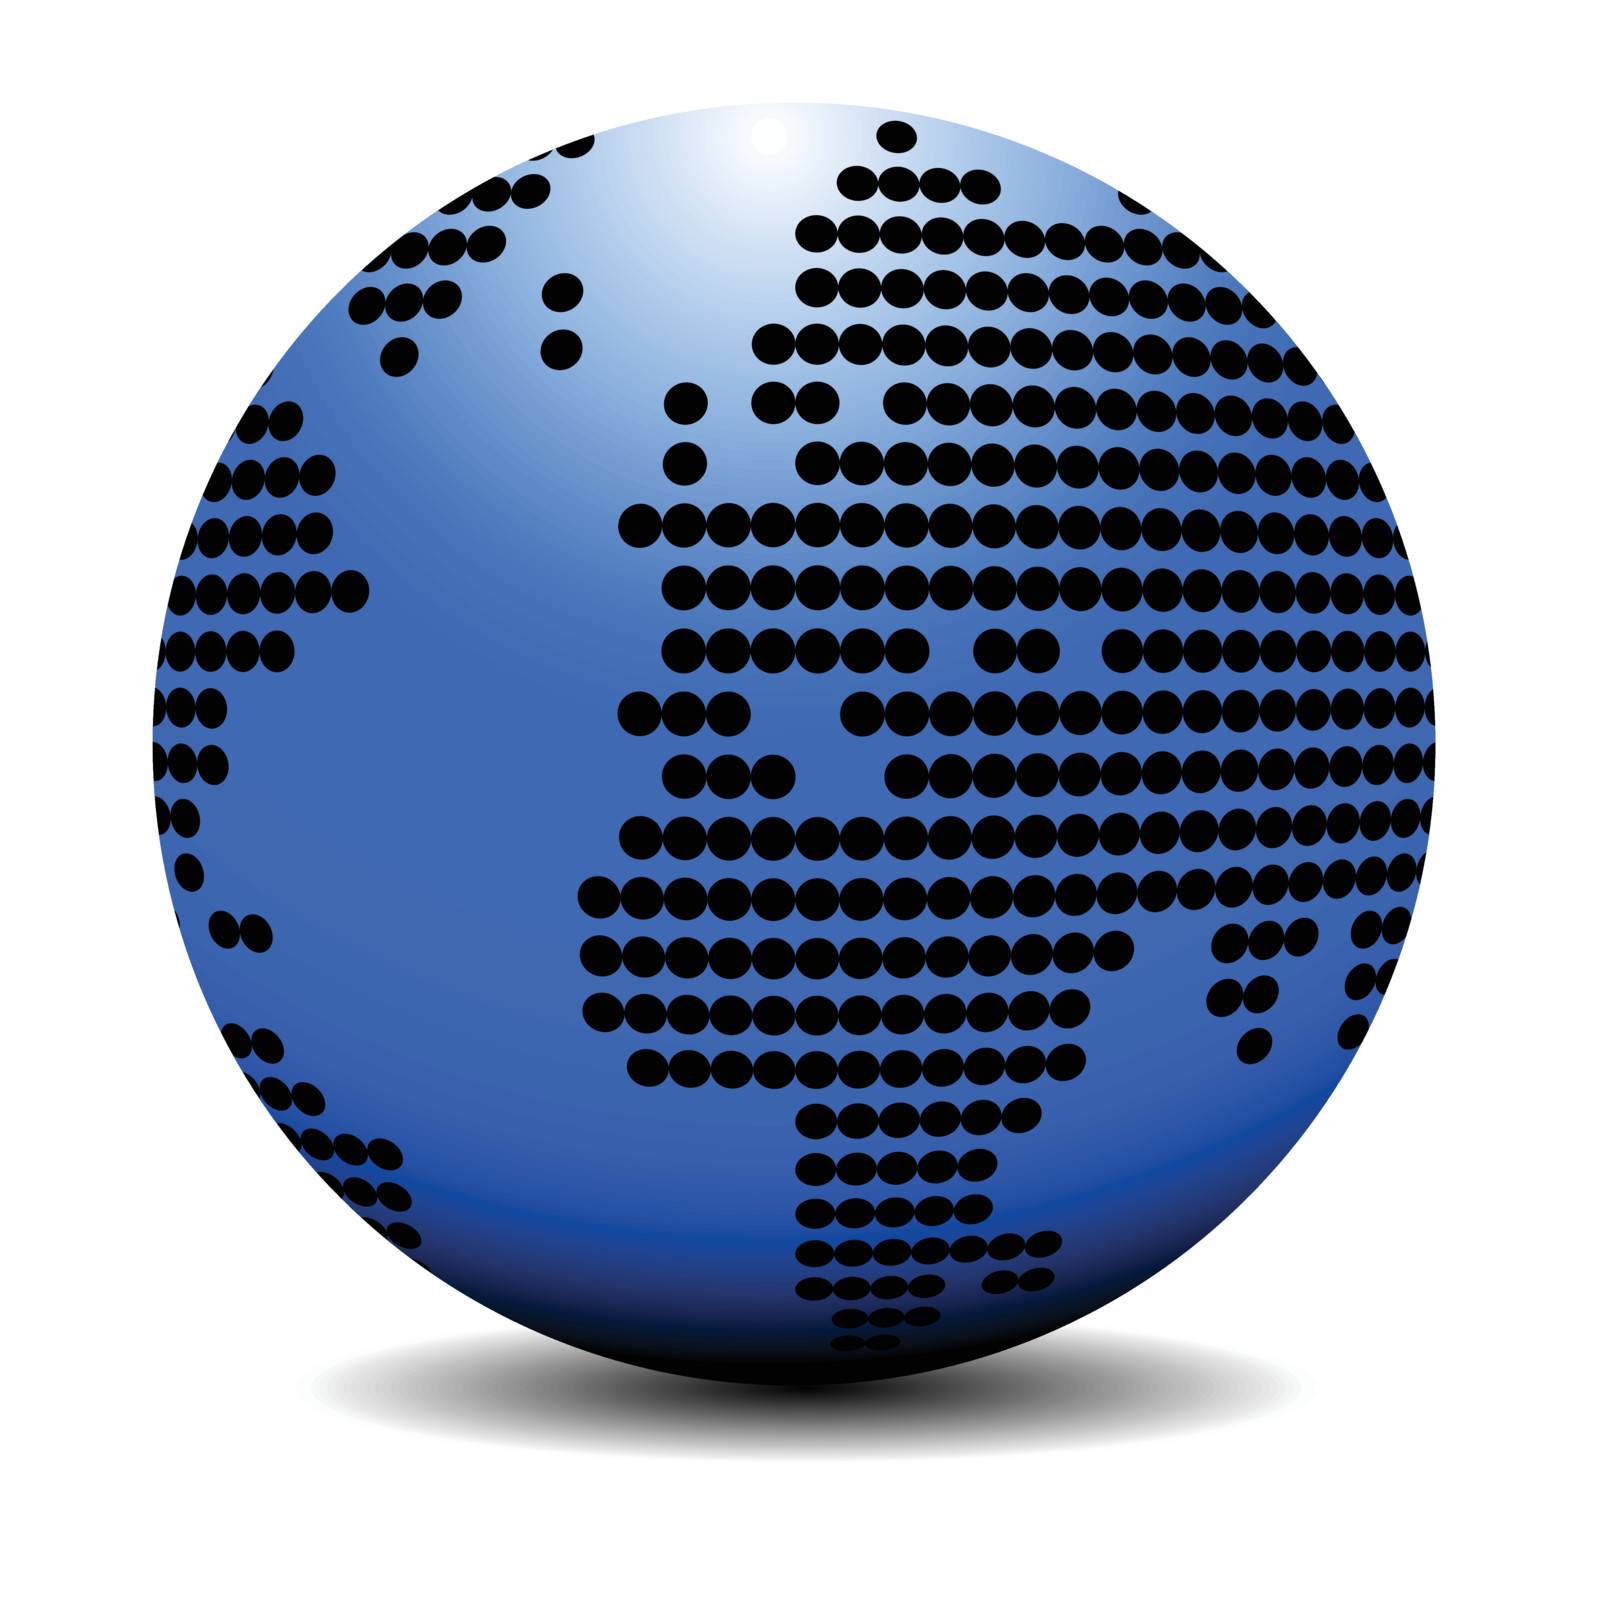 Blue earth globe concept by Lirch